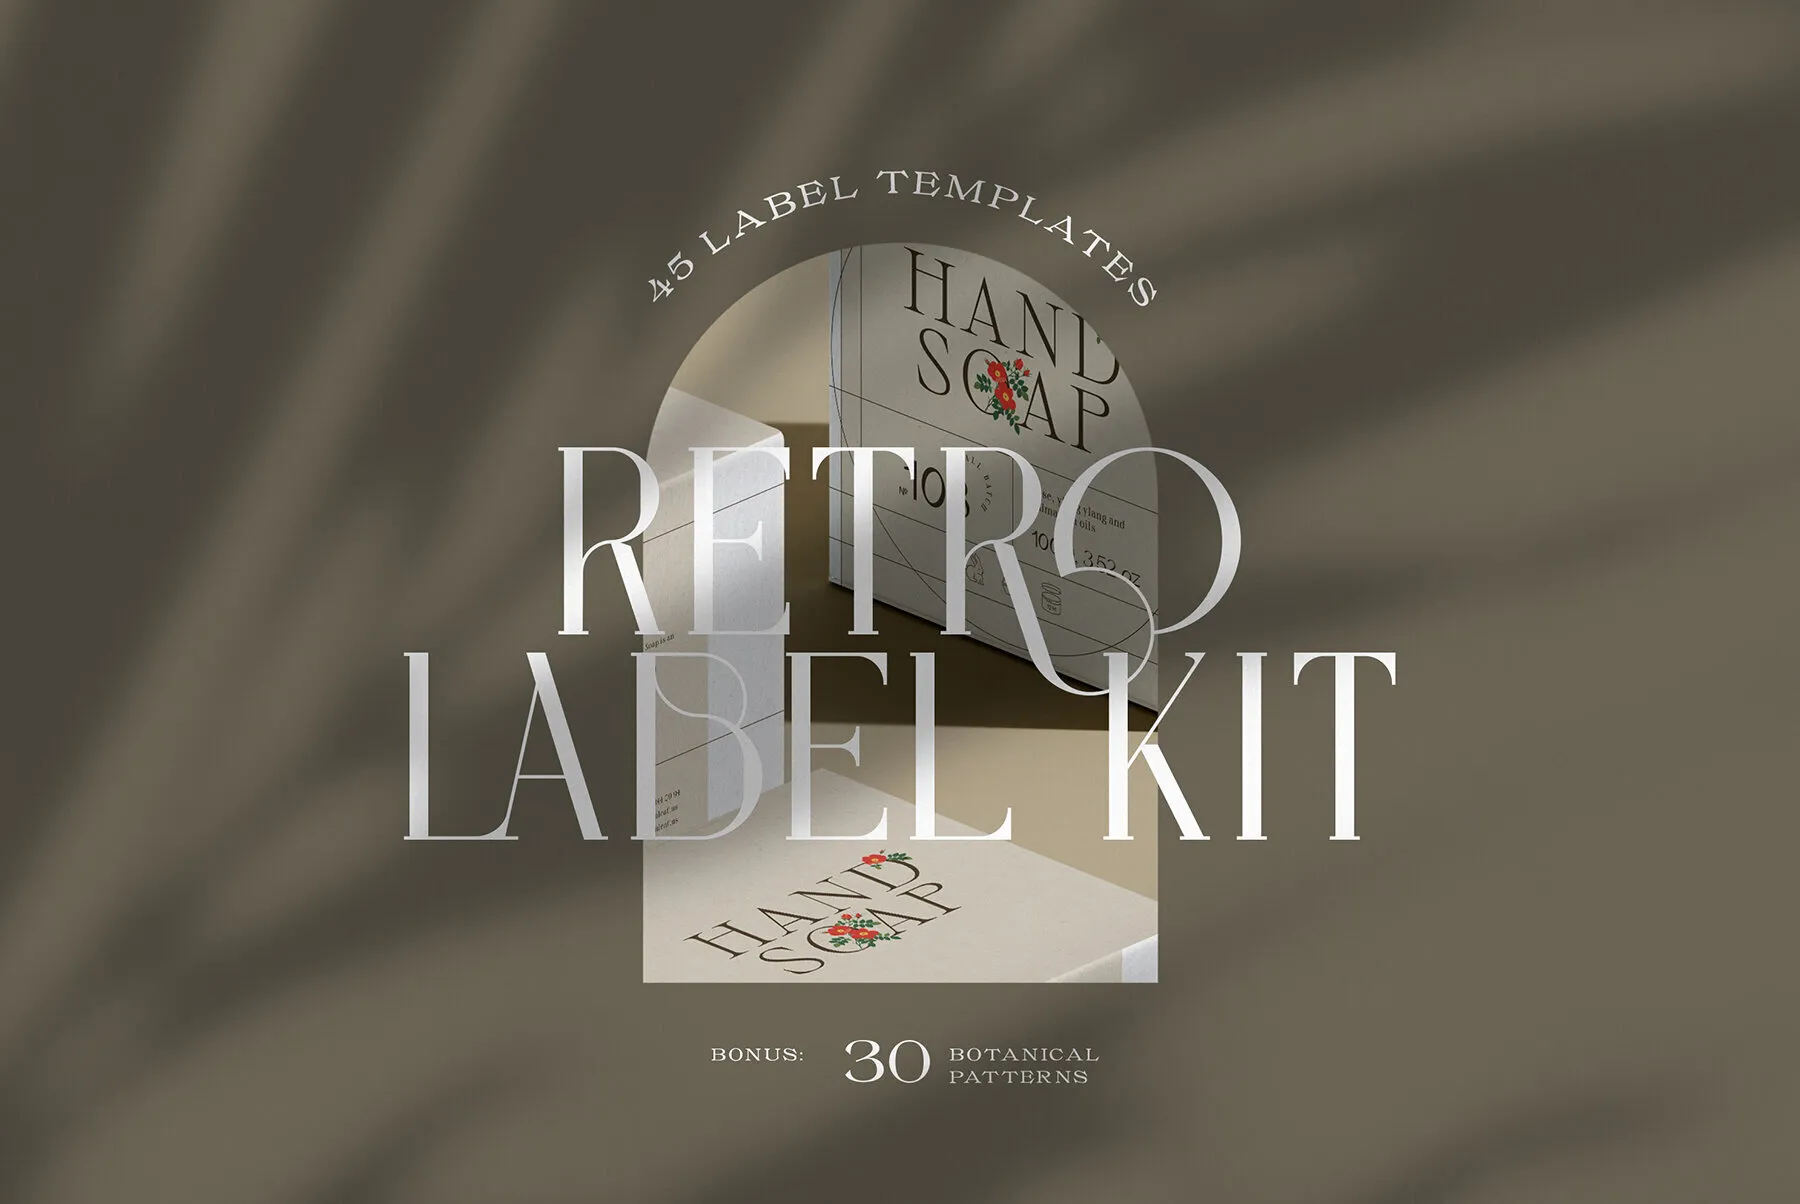 Floral Retro Label Kit